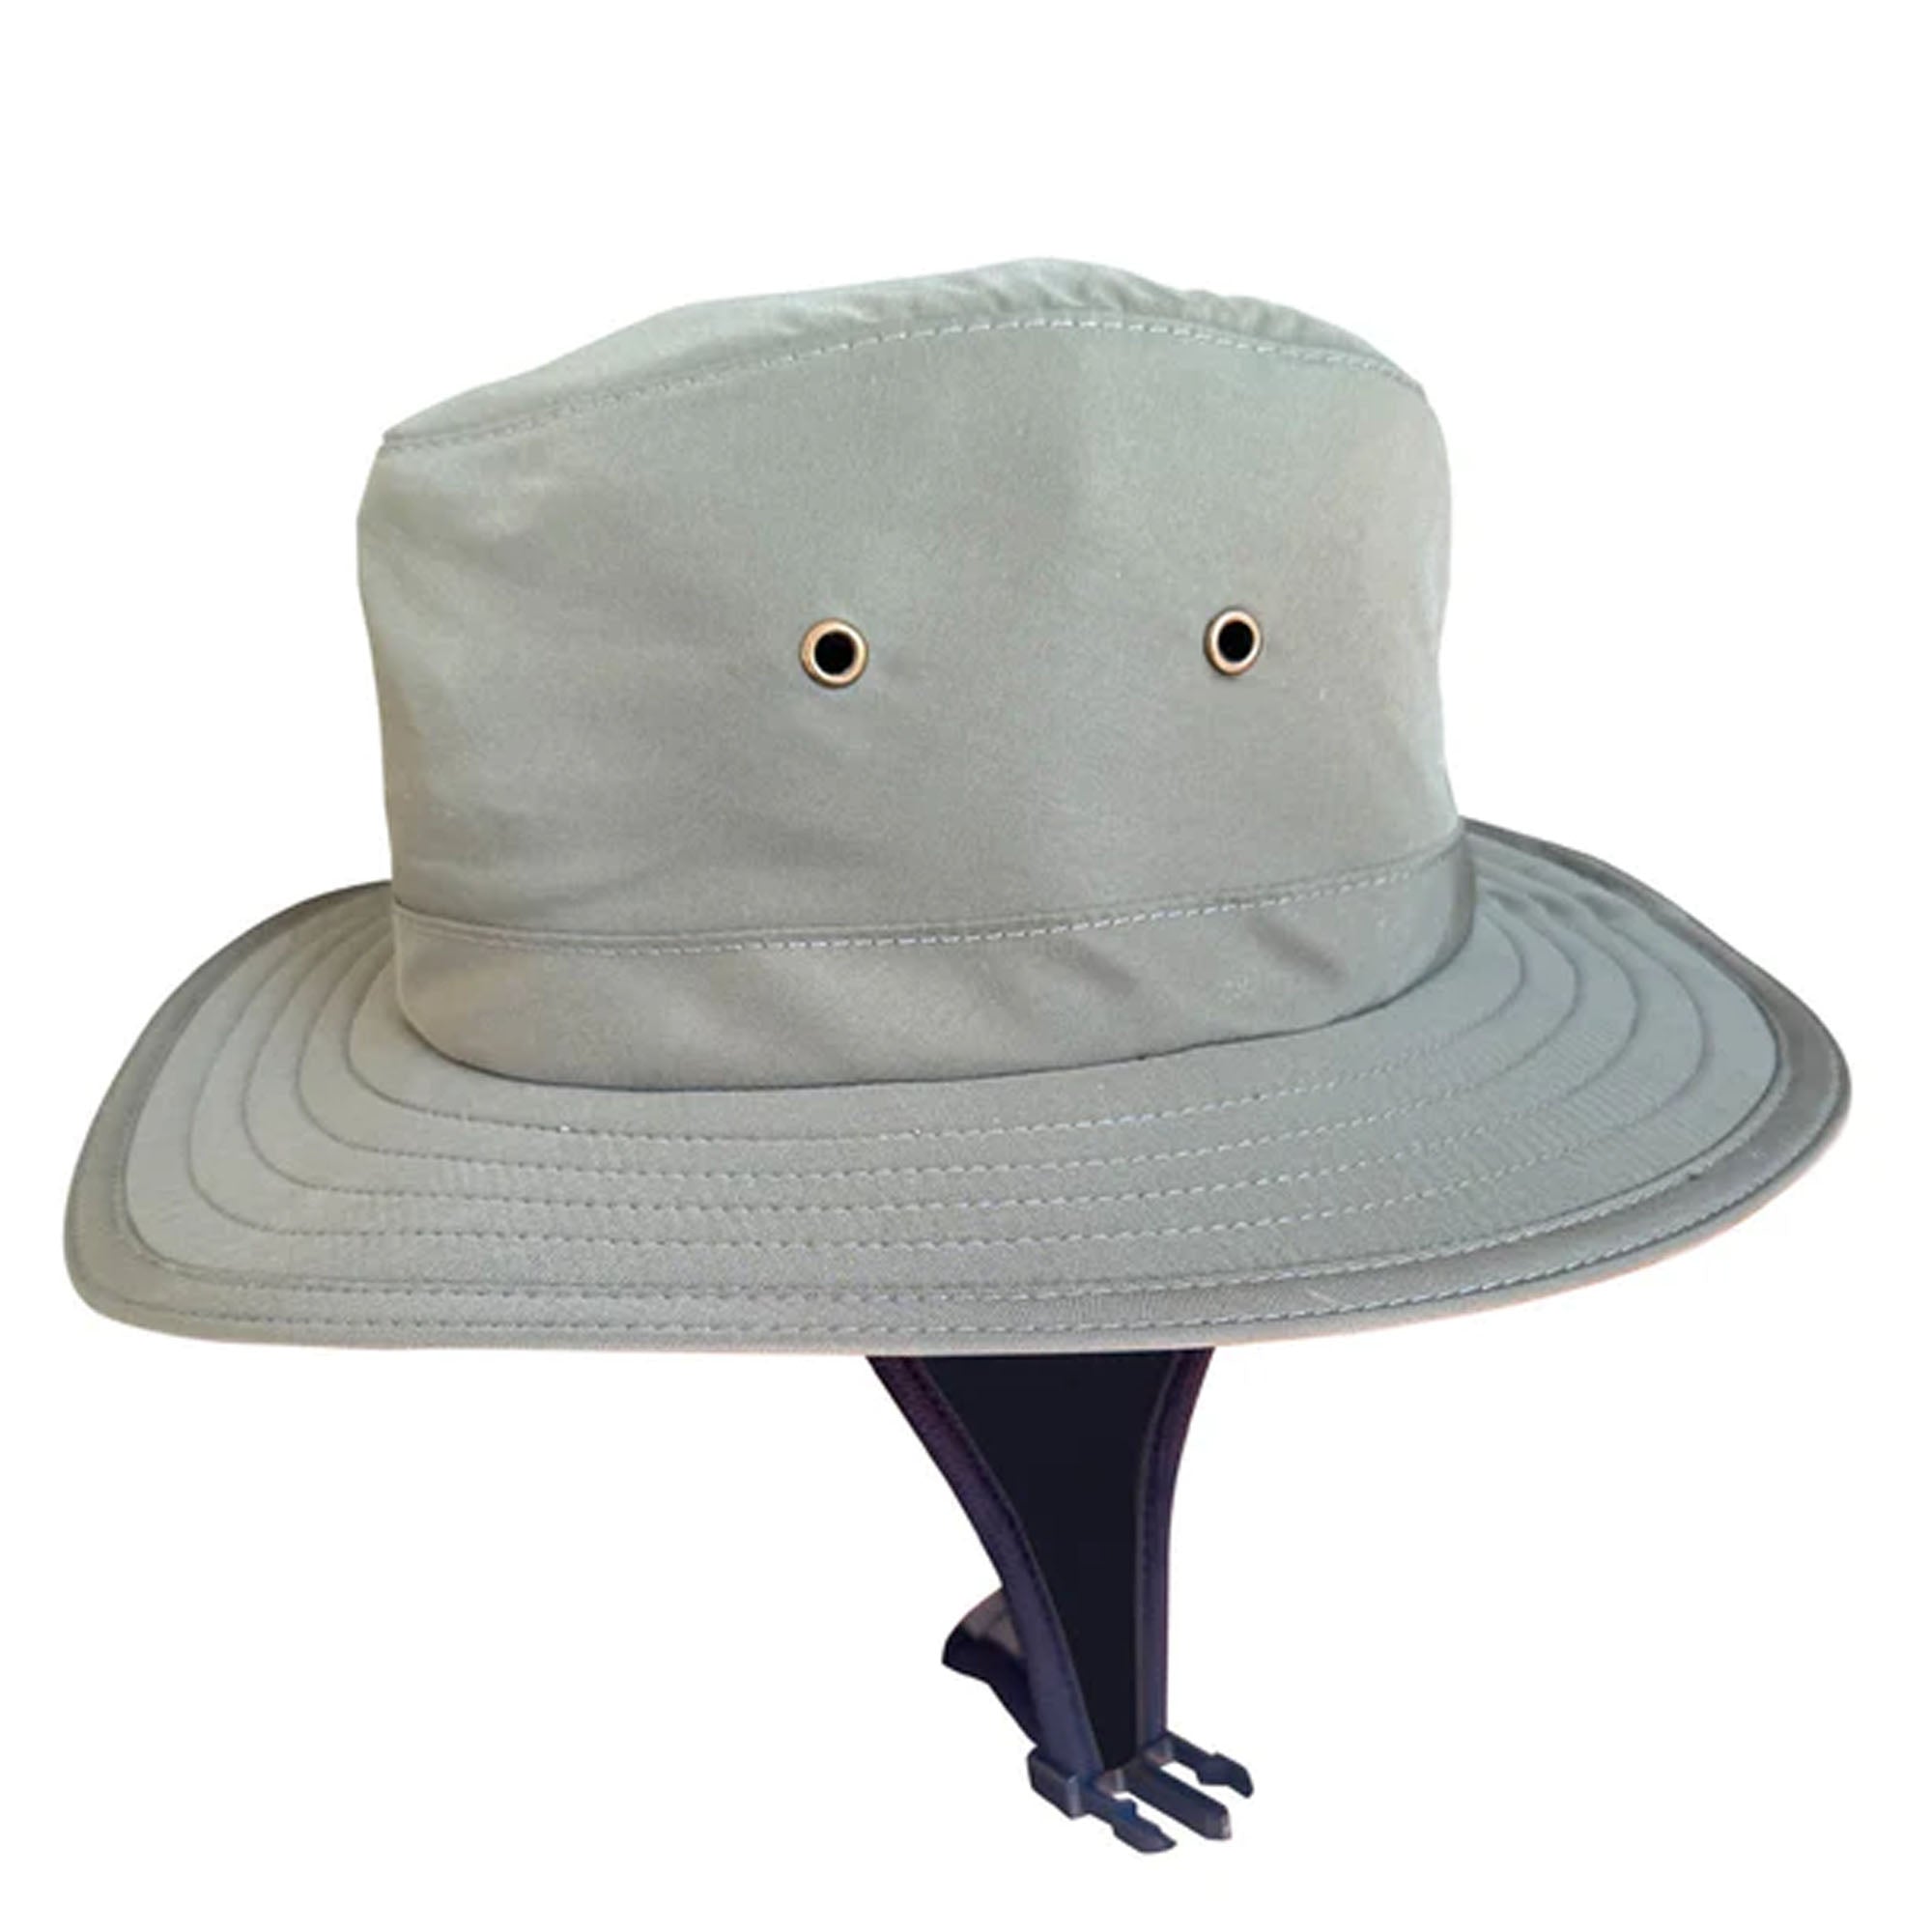 Conner Hats Men's Legionnaire Supplex Sun Cap, Sand, Os